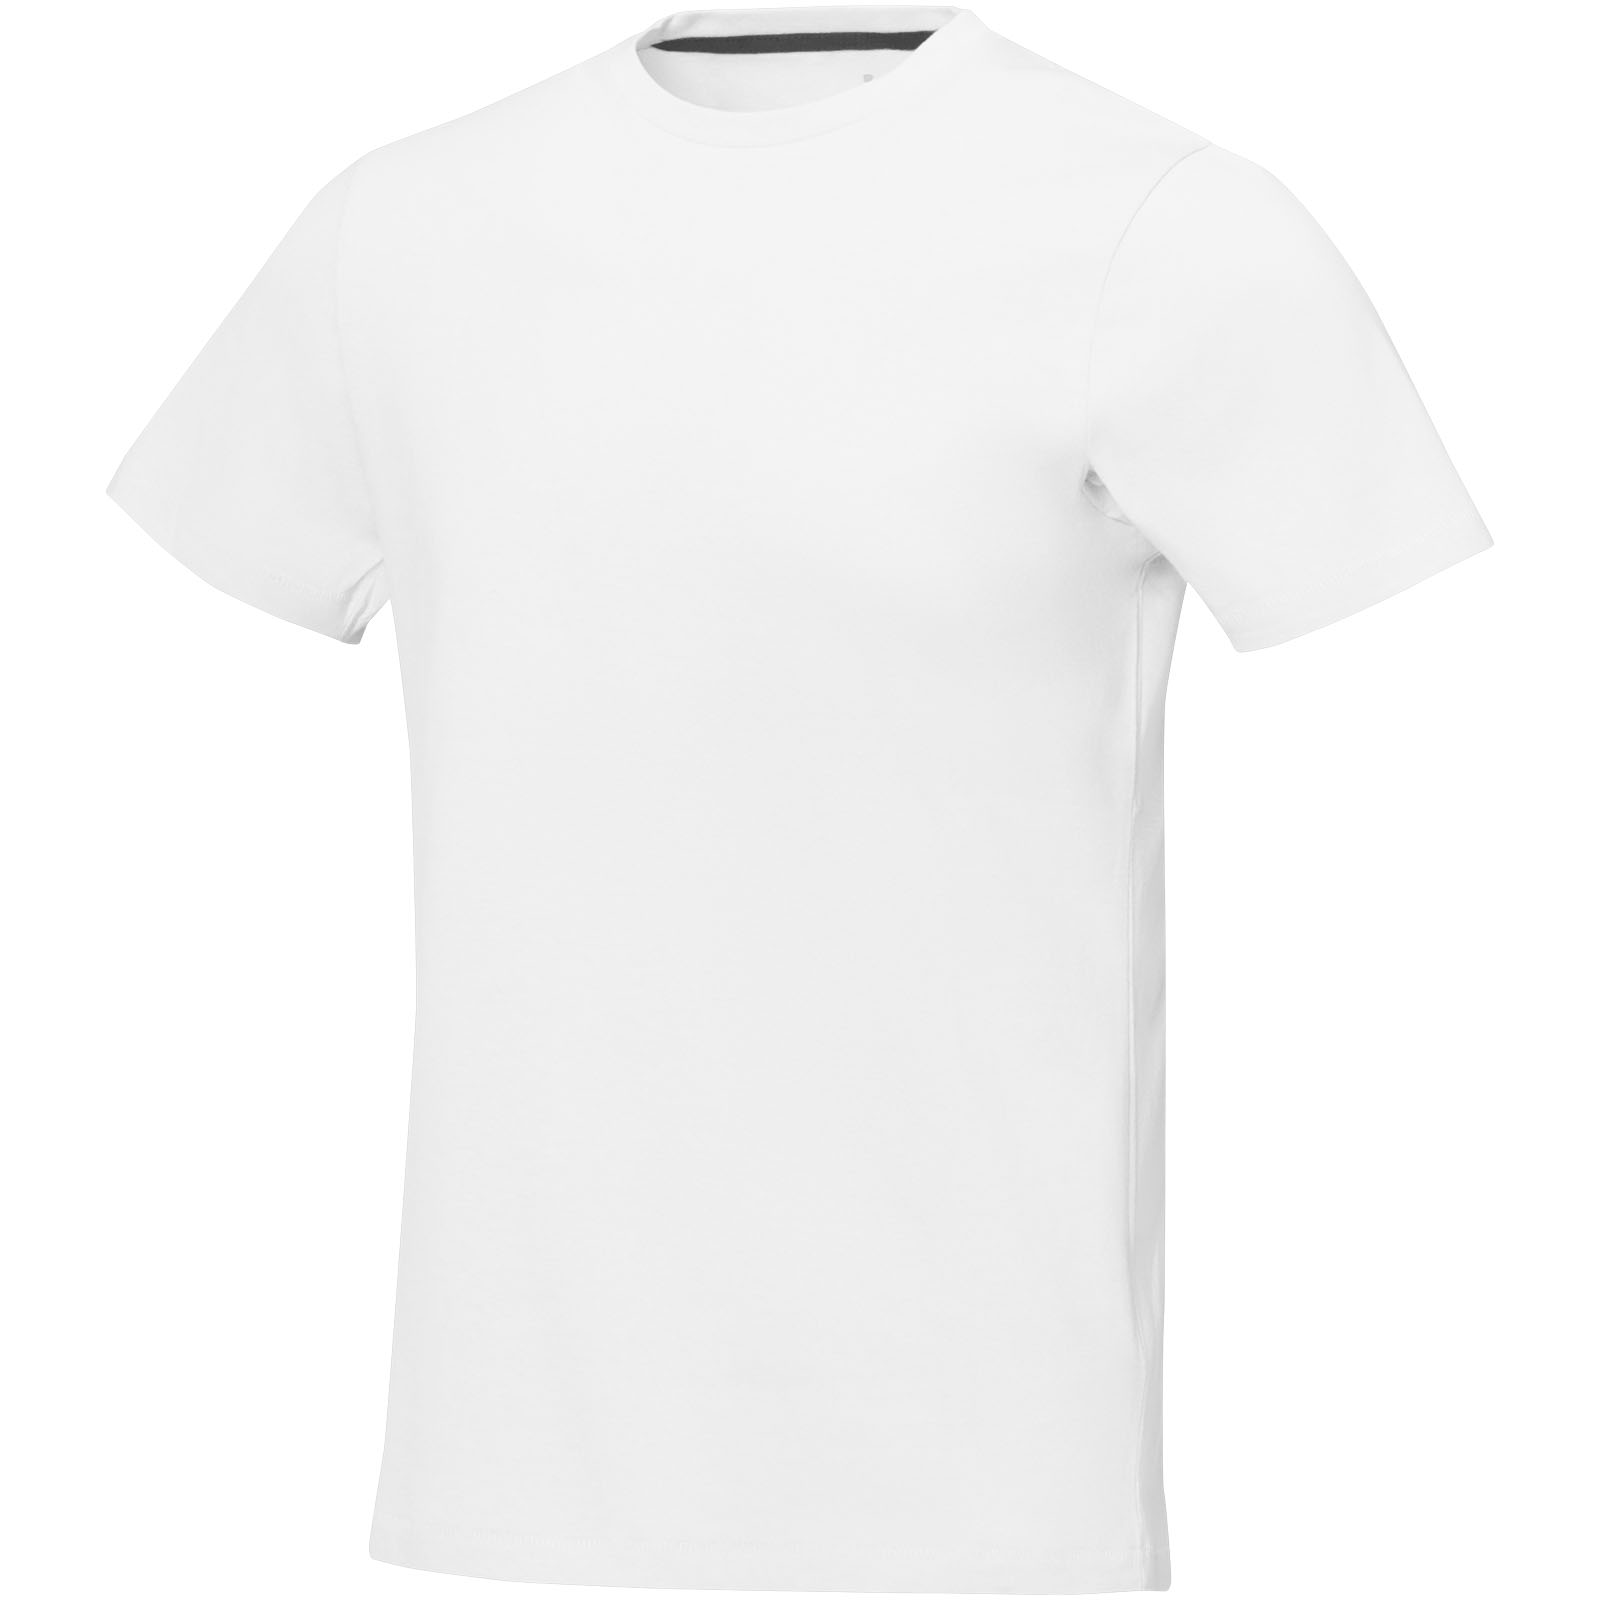 Nanaimo Short Sleeve Men's Cotton T-Shirt - Thornhill